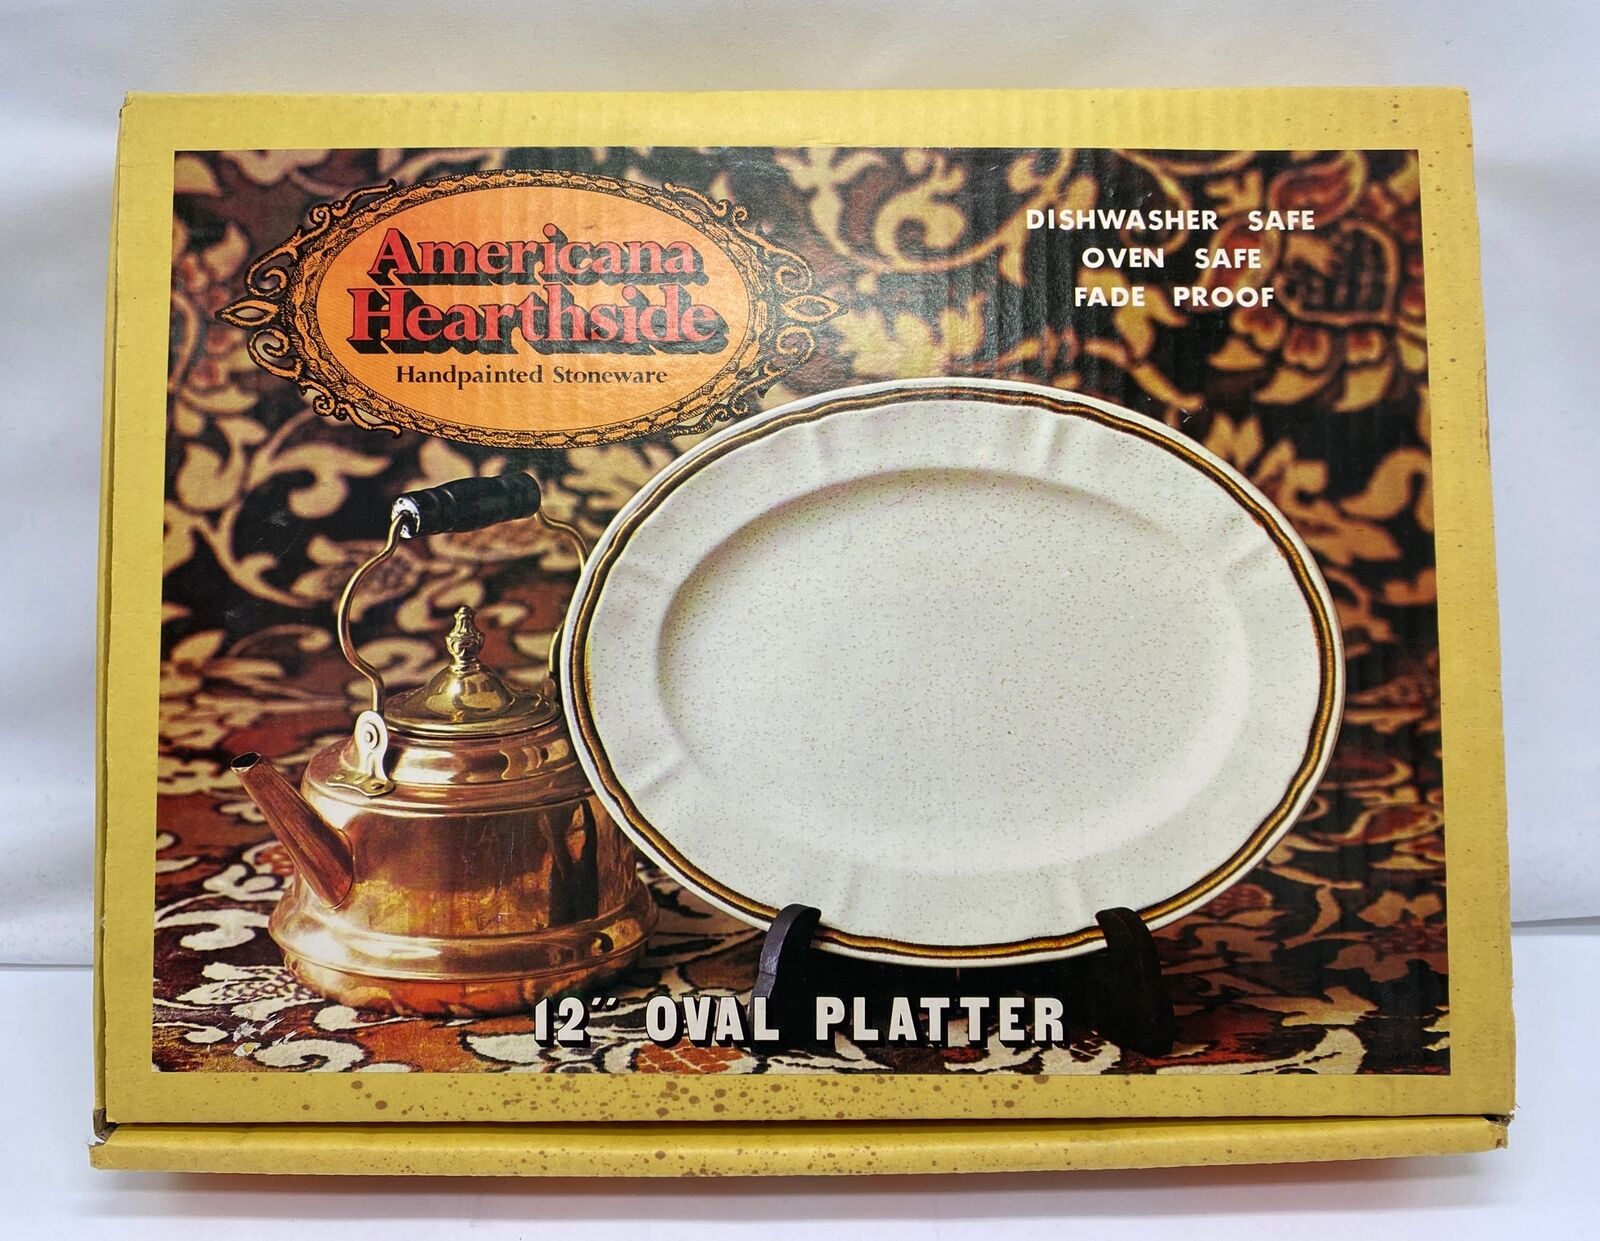 Americana Hearthside Stoneware Heritage 12" Oval Platter Dishwasher Oven OK NEW Hearthside